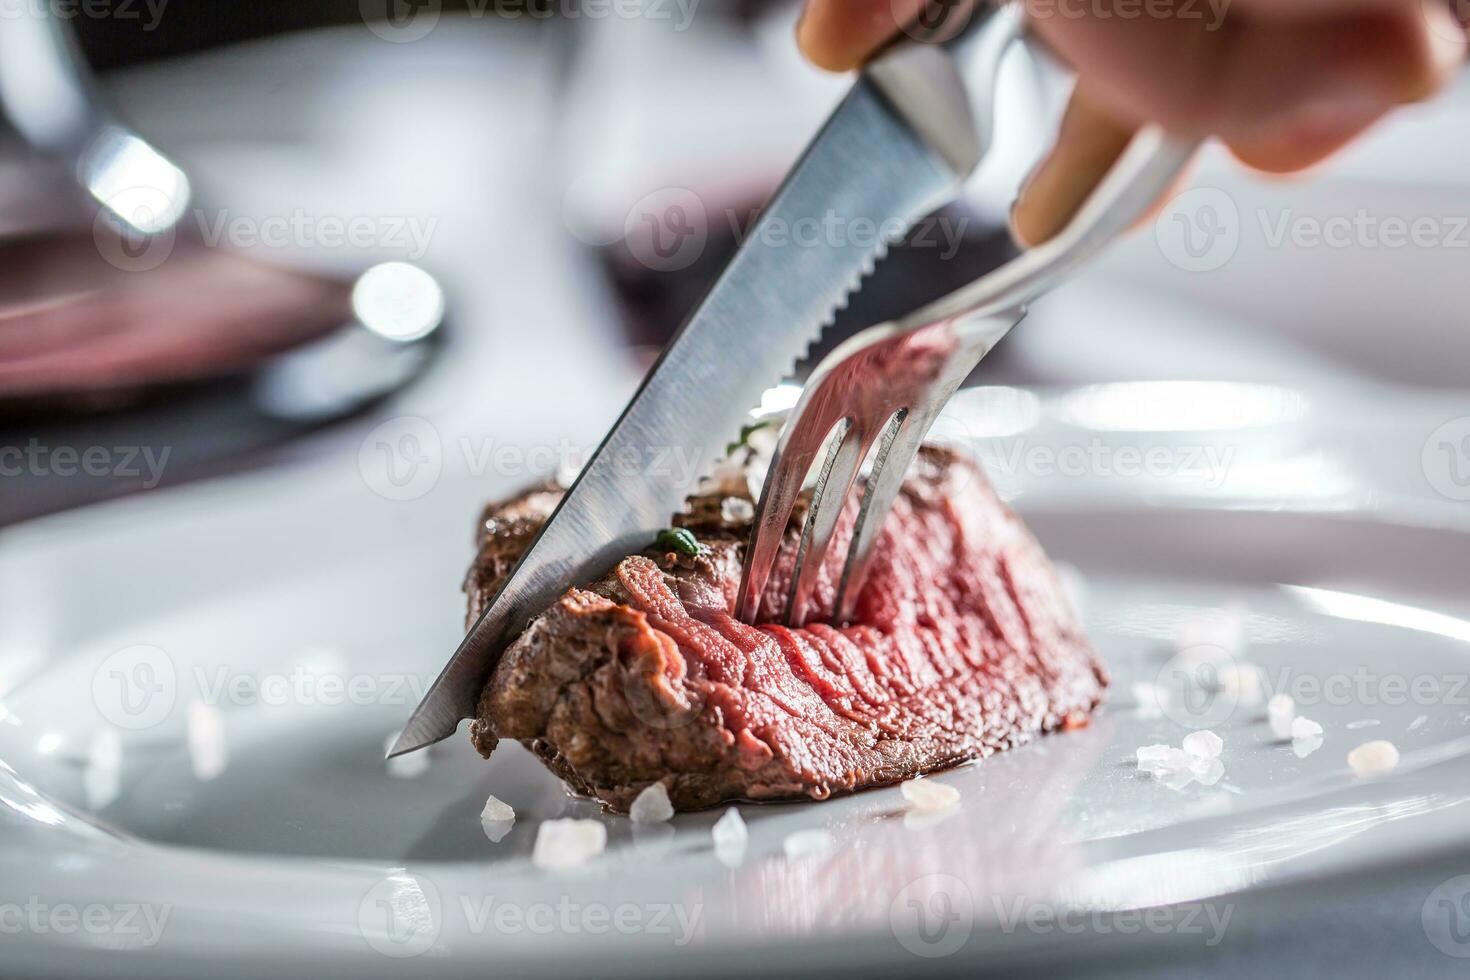 rundvlees lende steak Aan wit bord en rood wijn in kroeg of restaurant foto